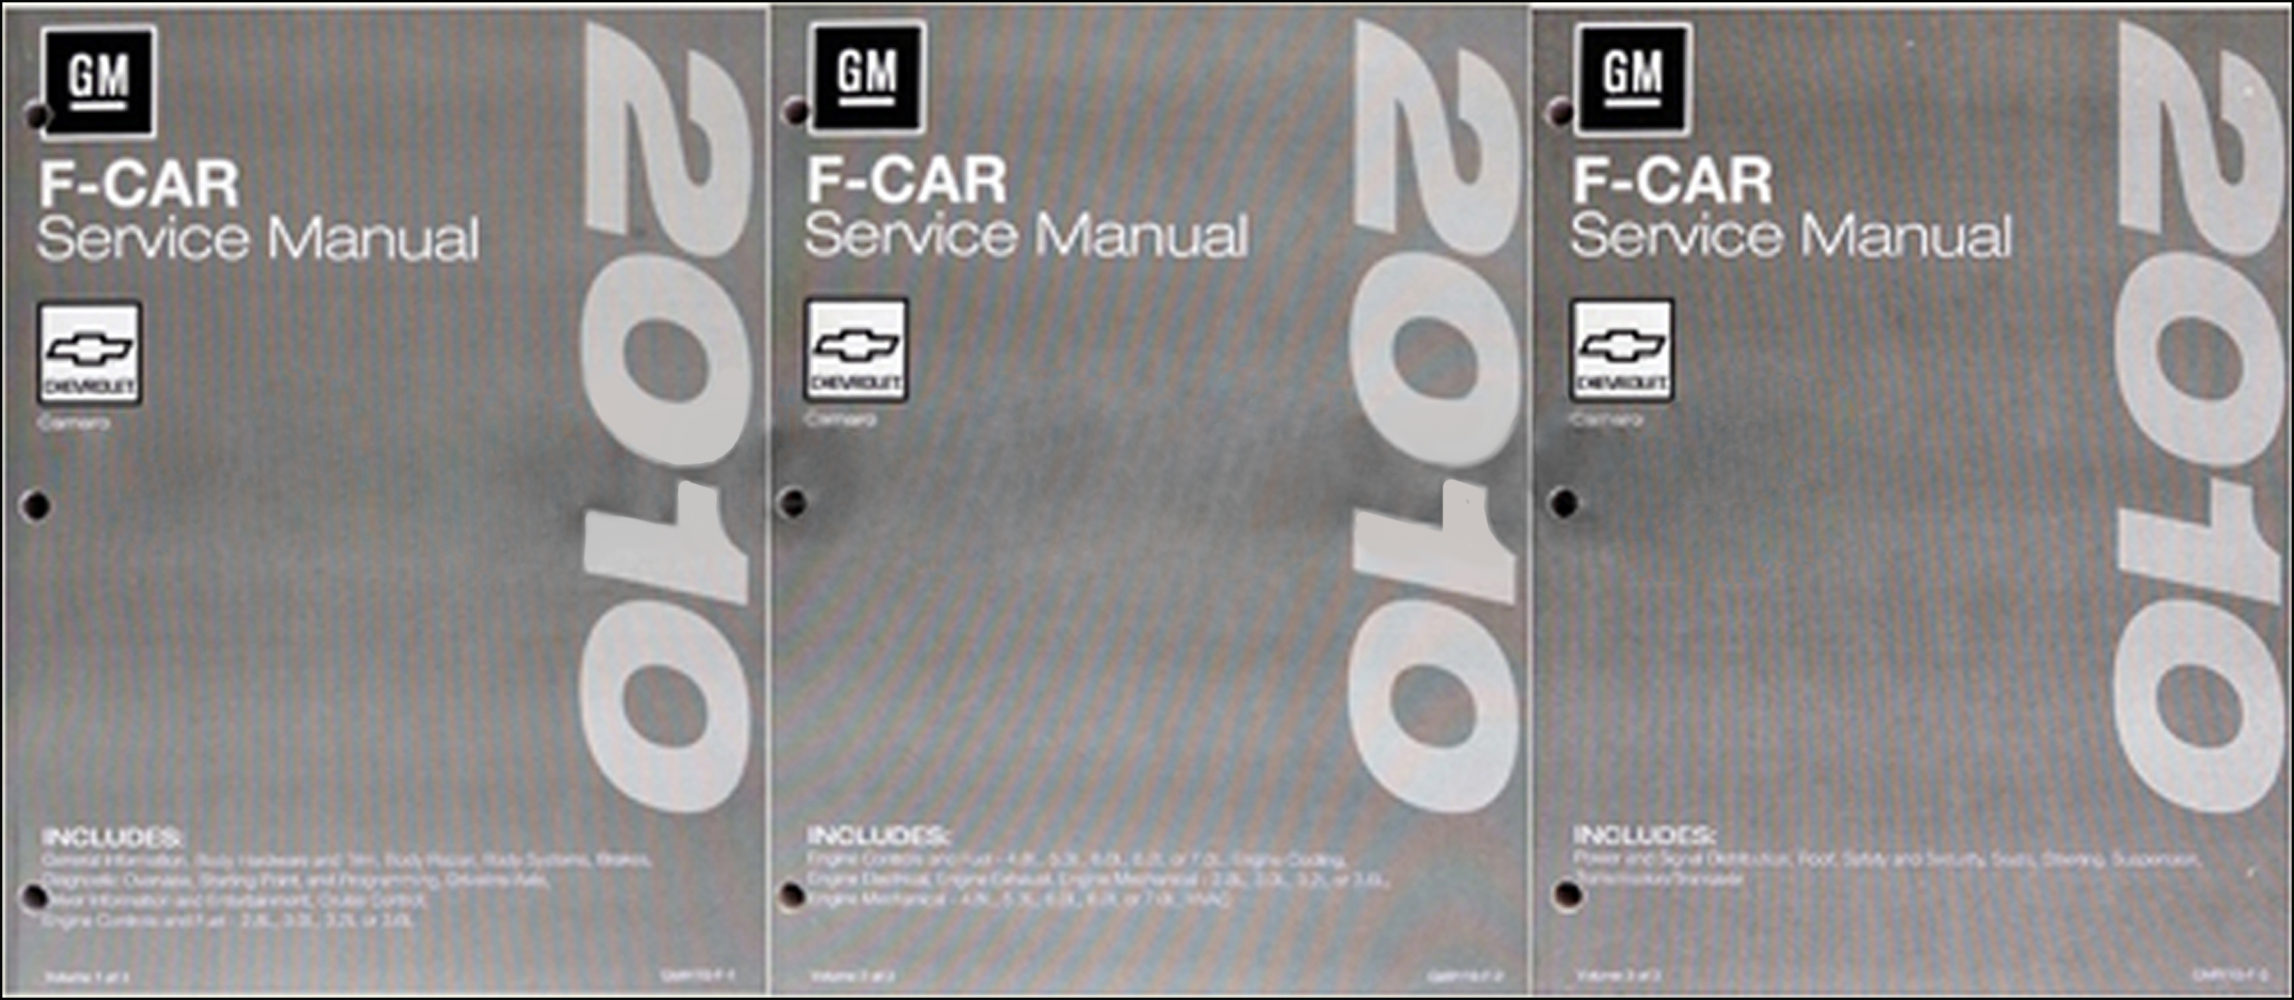 2002 Camaro, Firebird, & Trans Am Repair Manual Original 3 Volume Set 